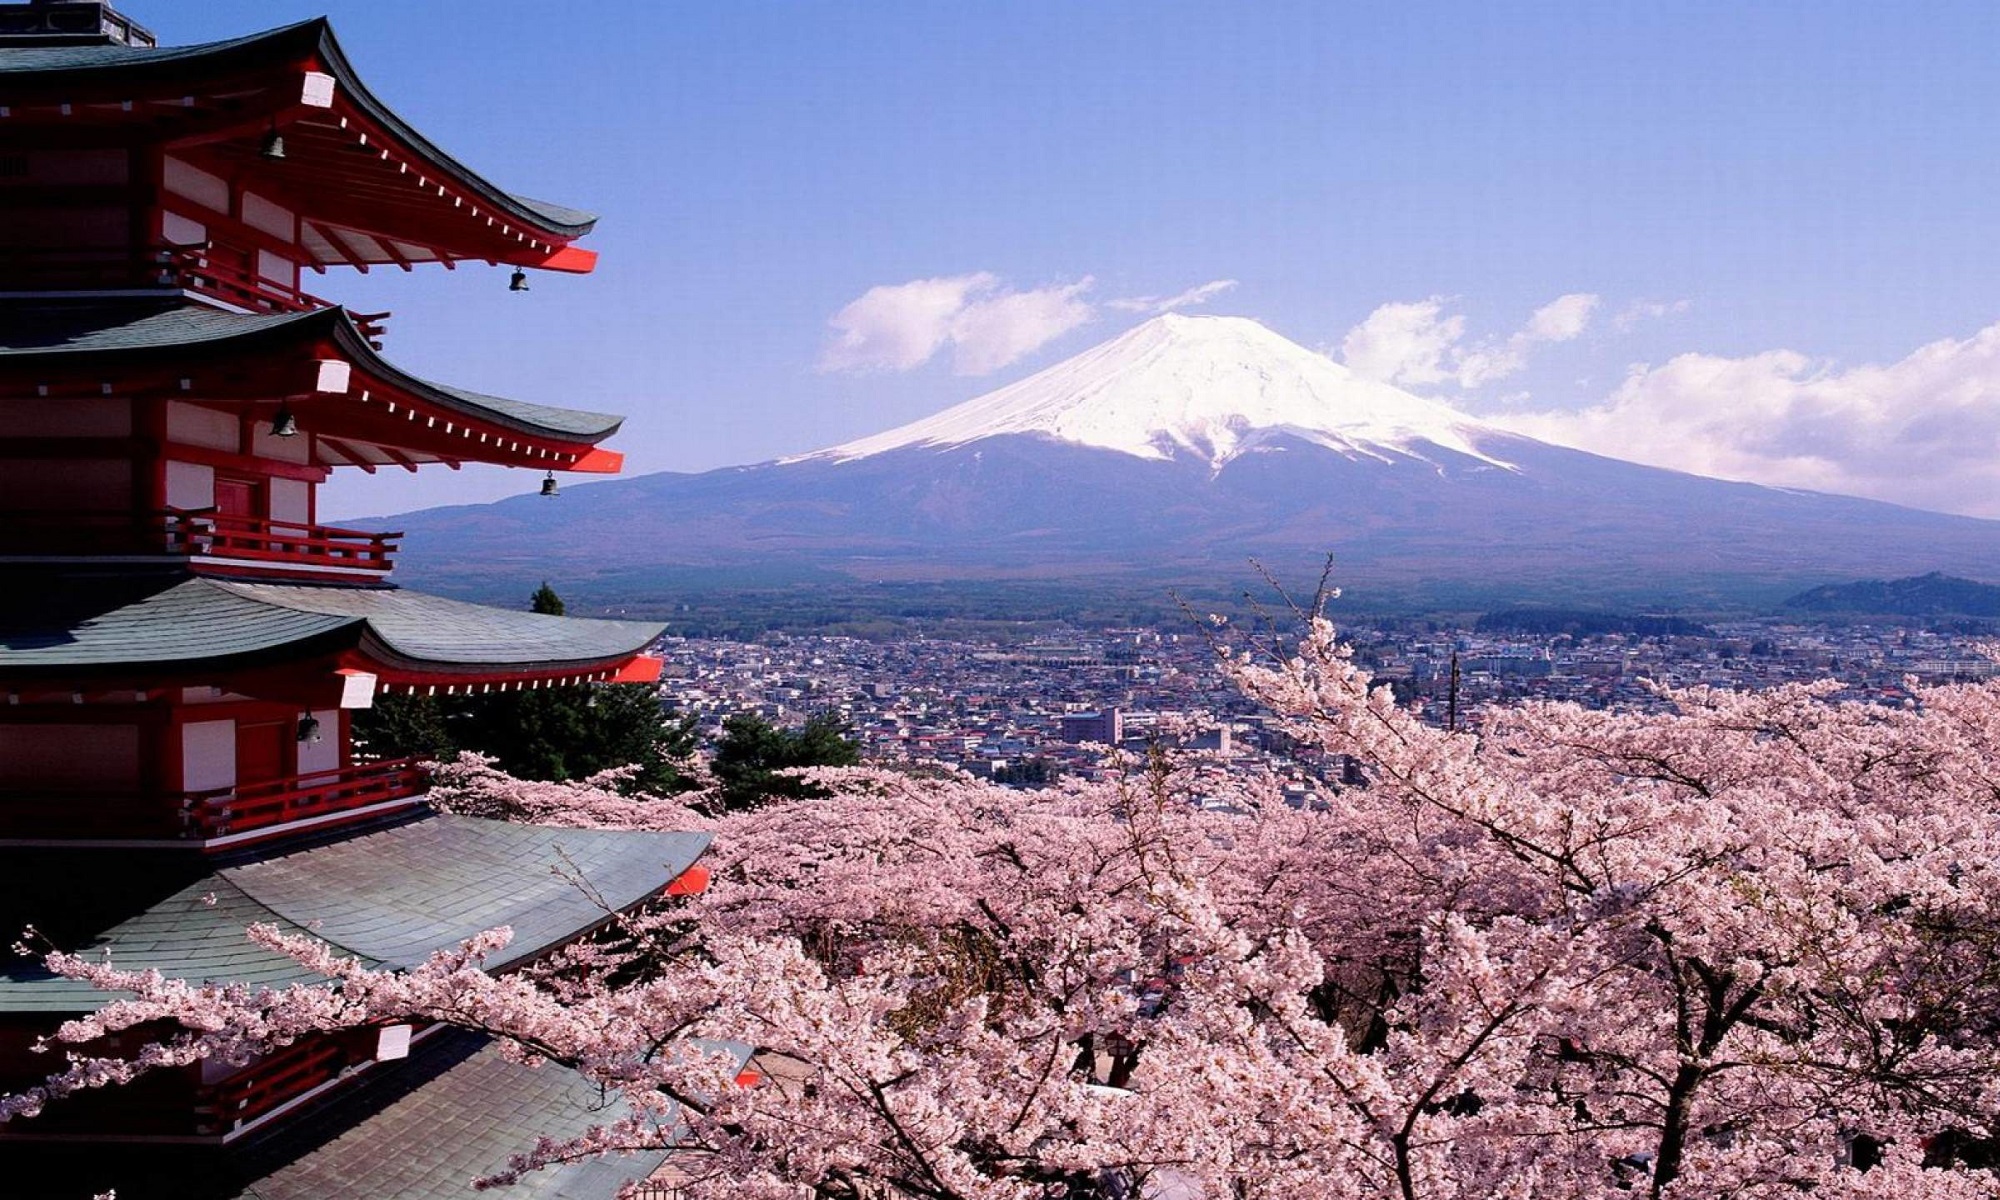 Fuji mountain and sakura panorama.